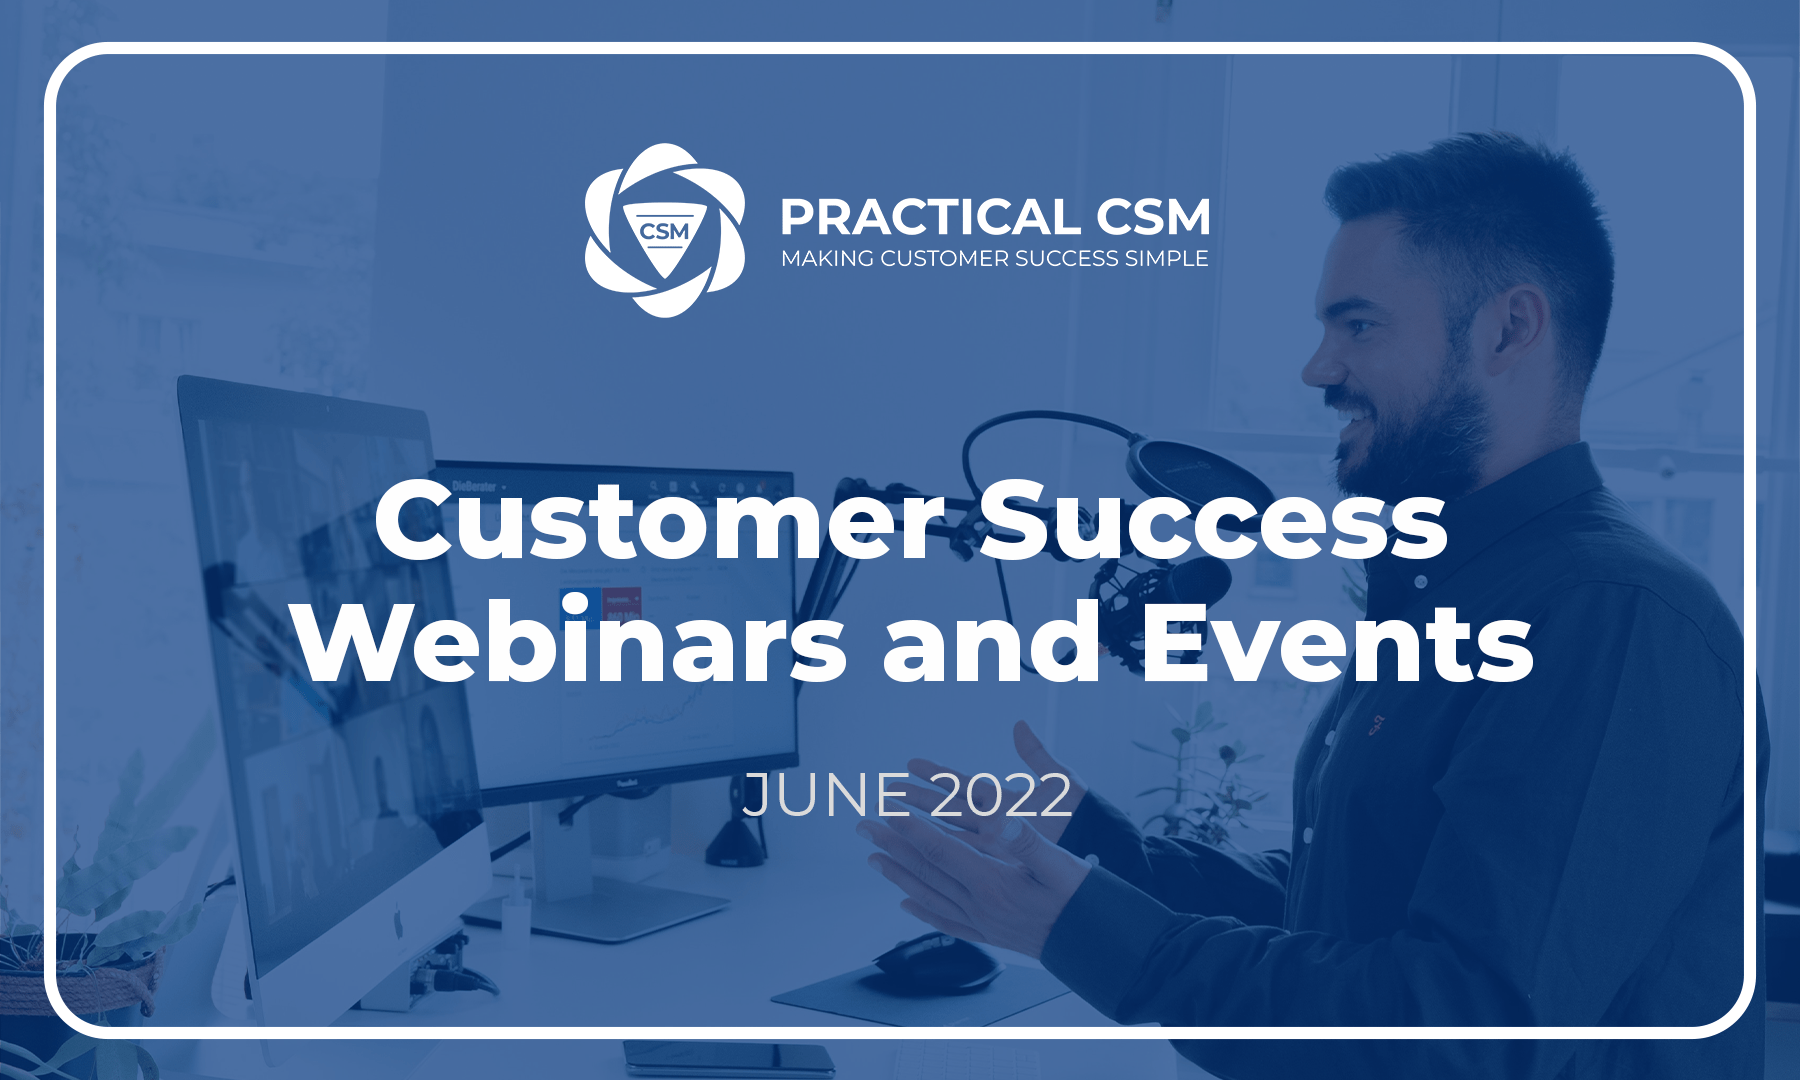 Practical CSM Customer Success Webinars and Events June 2022